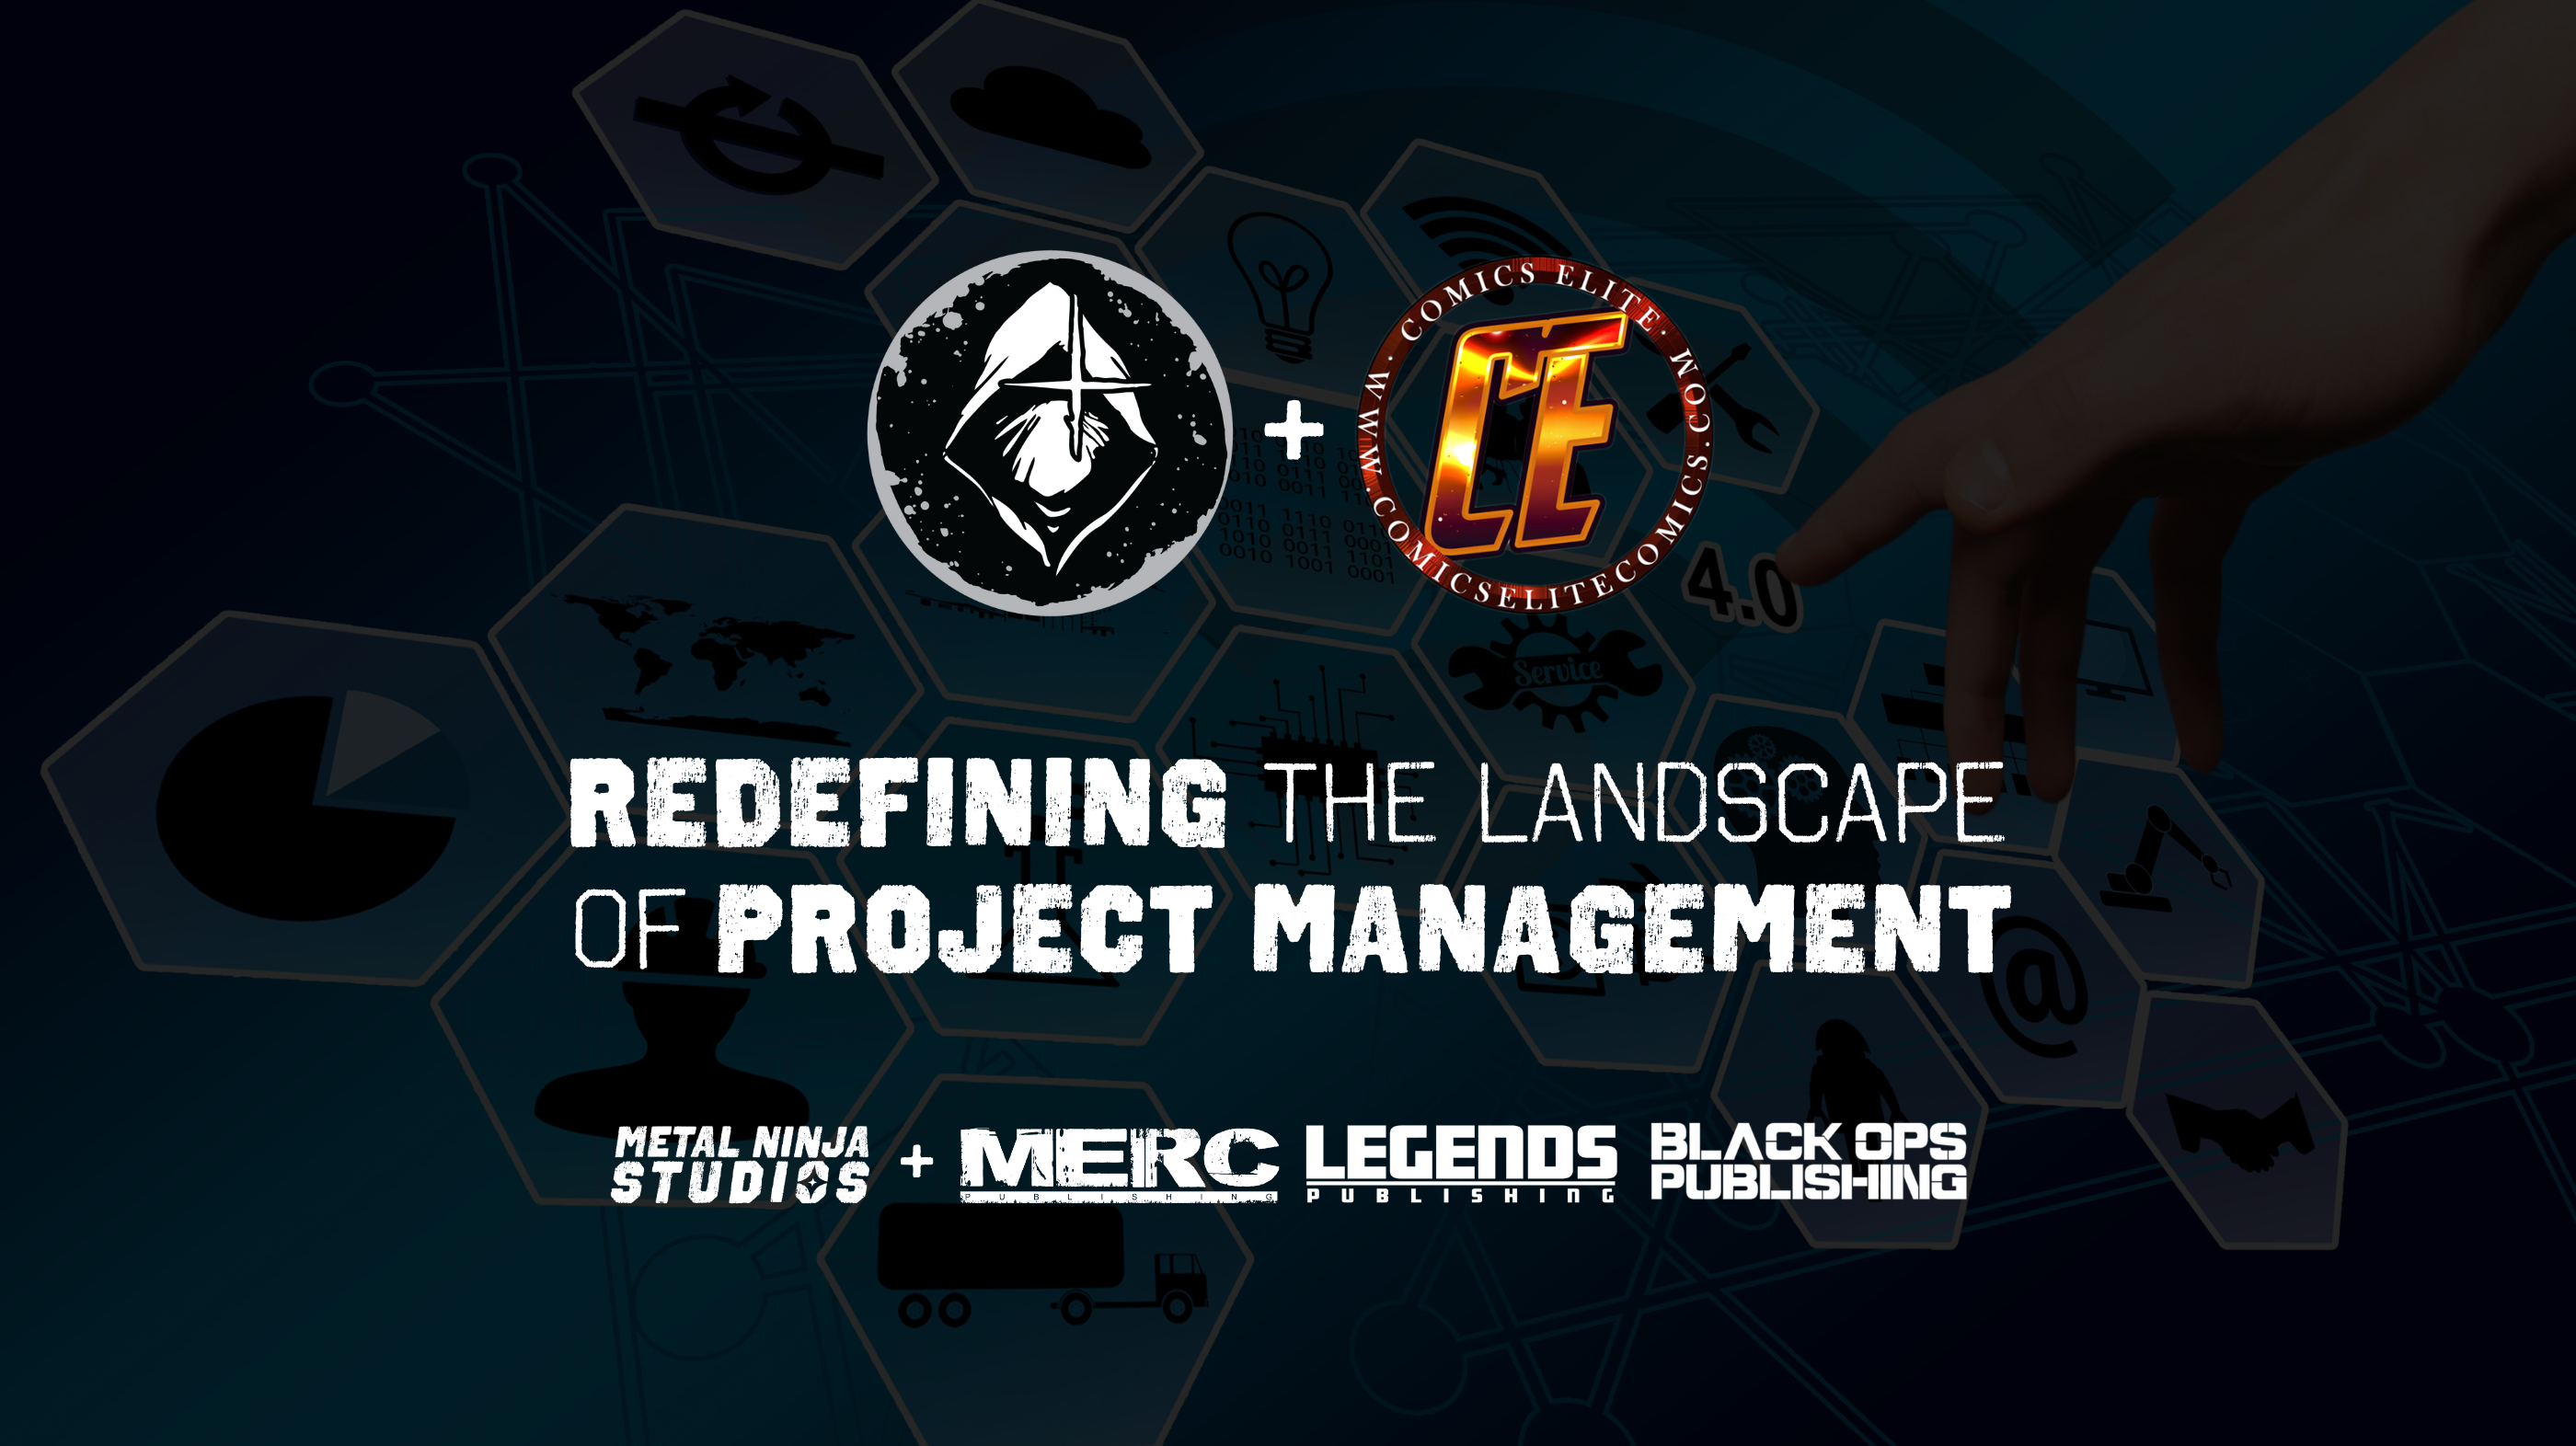 Metal Ninja Studios Assumes Project Management and Design Responsibilities for Key Publishing Ventures